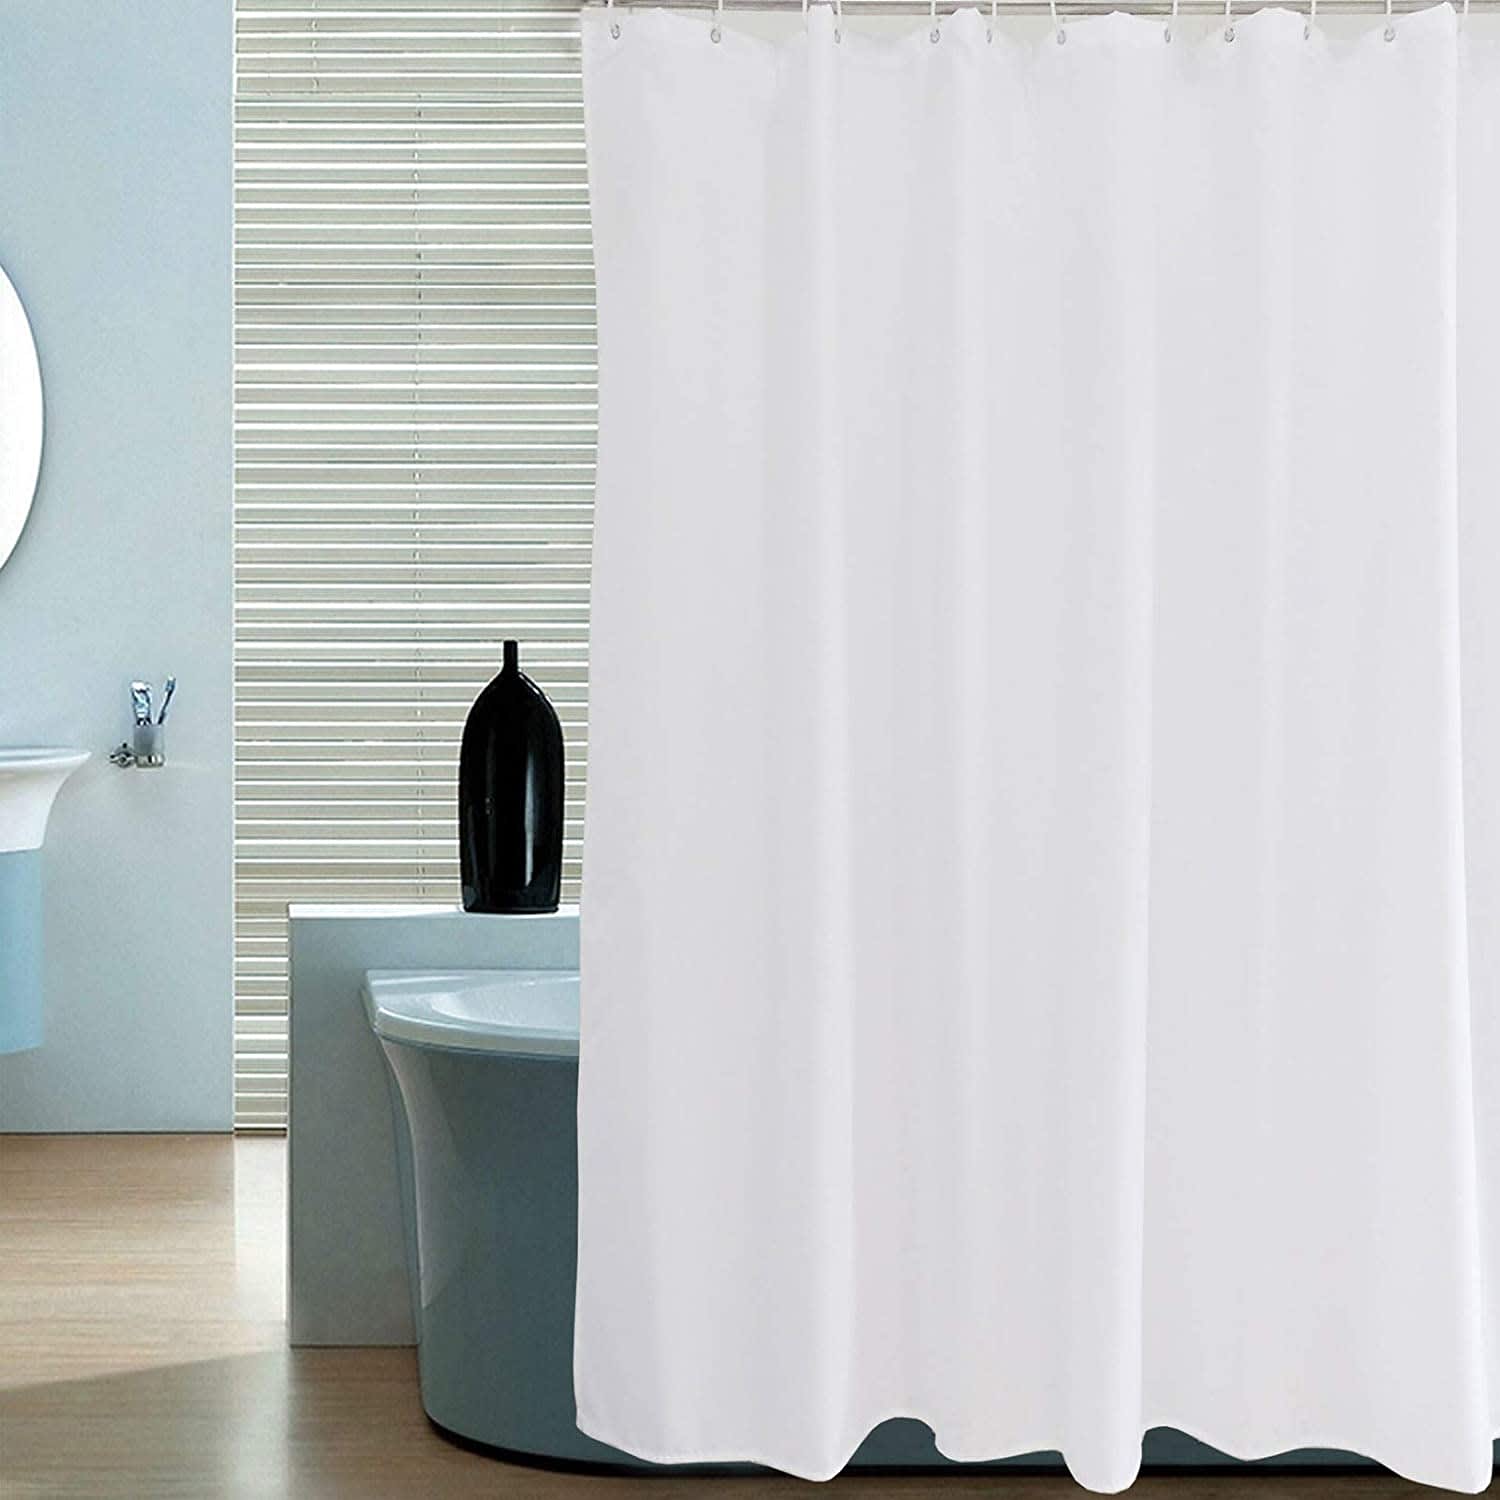 Enjoyment Waterproof Bathroom Polyester Shower Curtain Liner Water Resistant